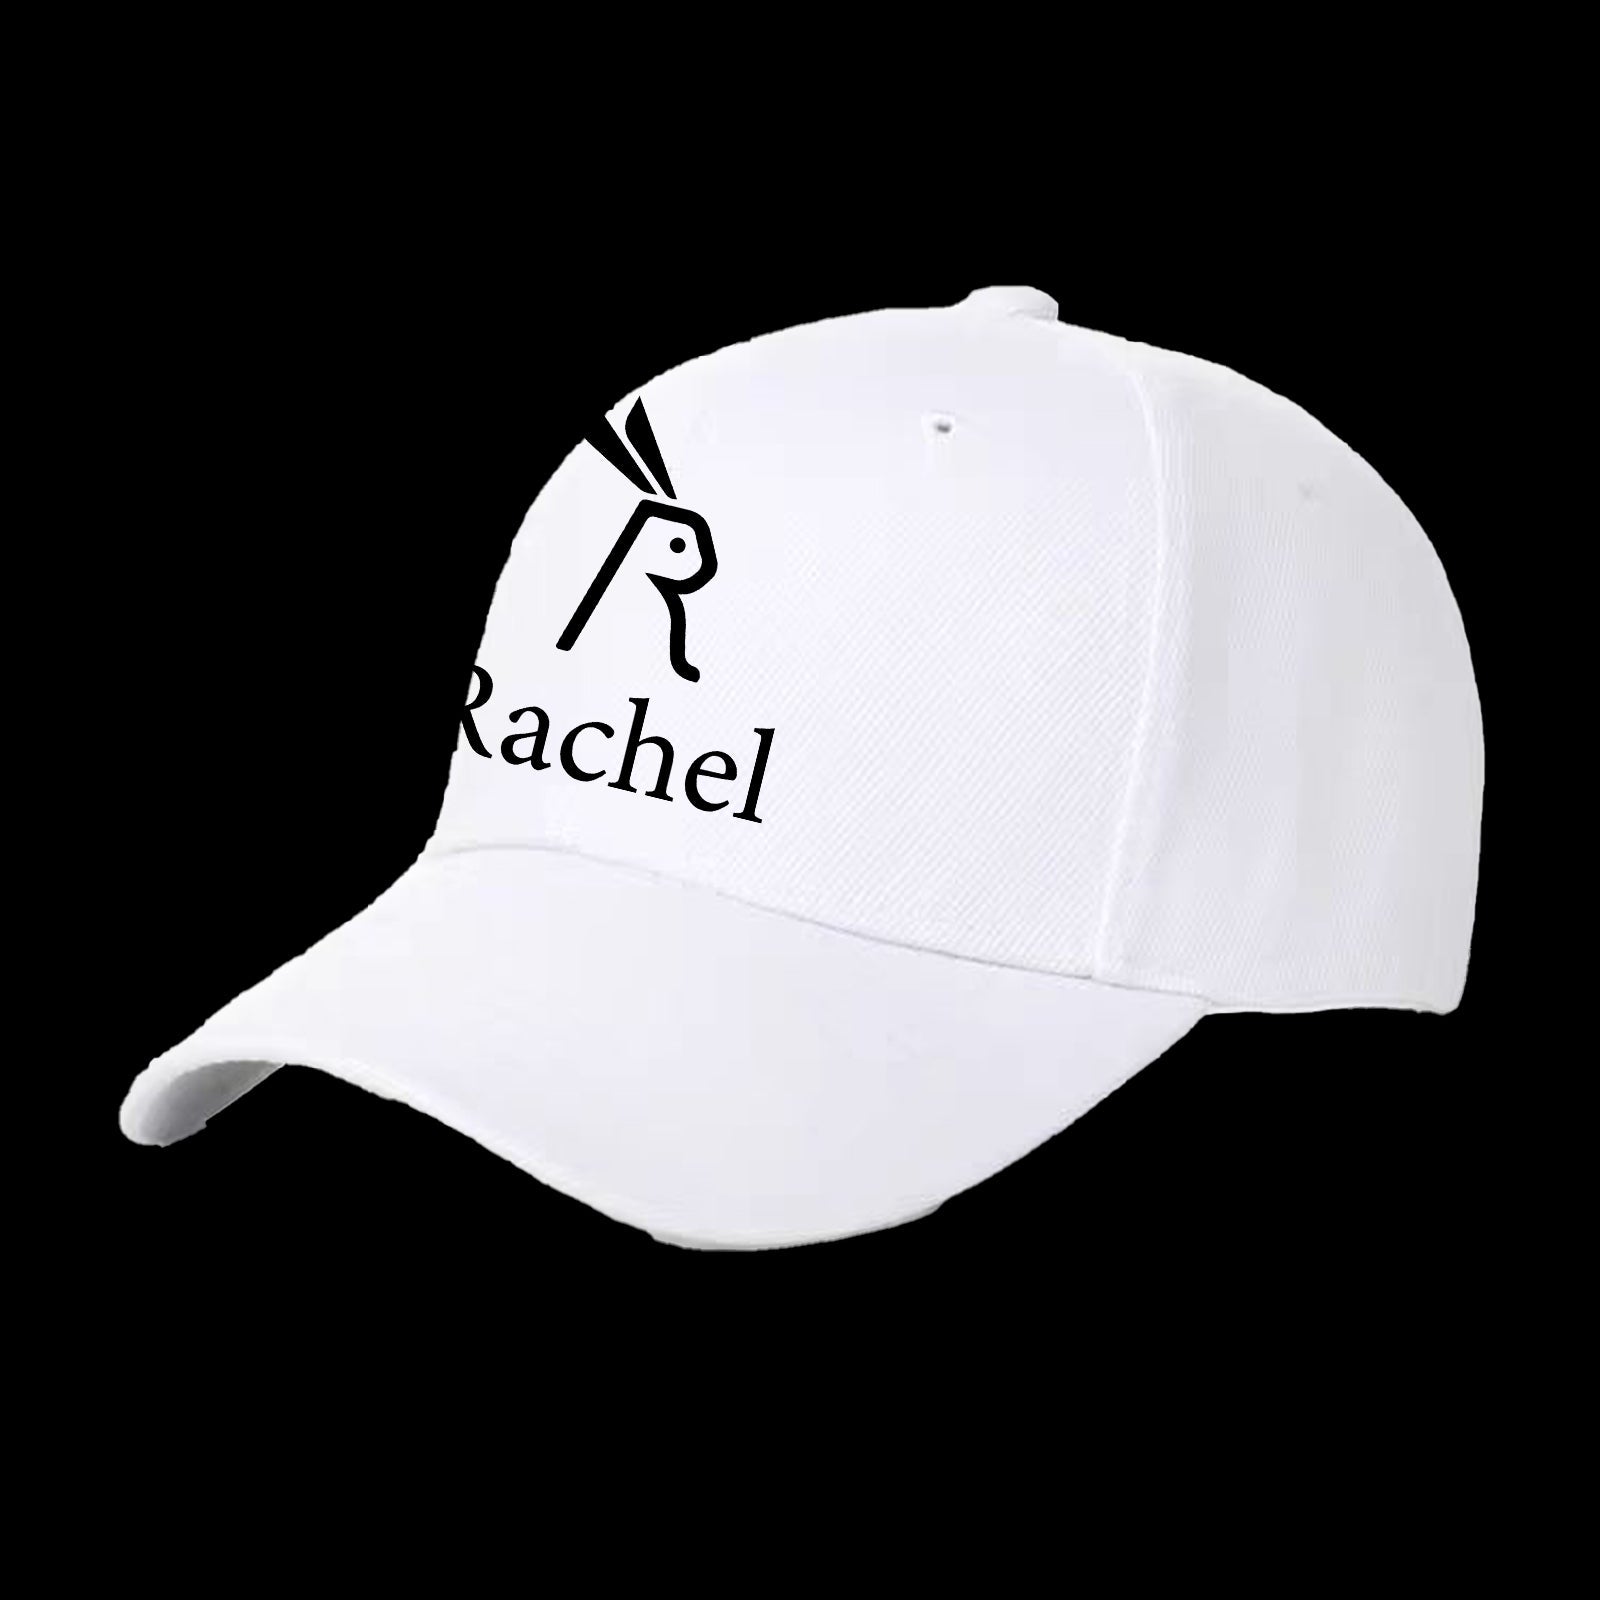 Rachel embroidered baseball cap